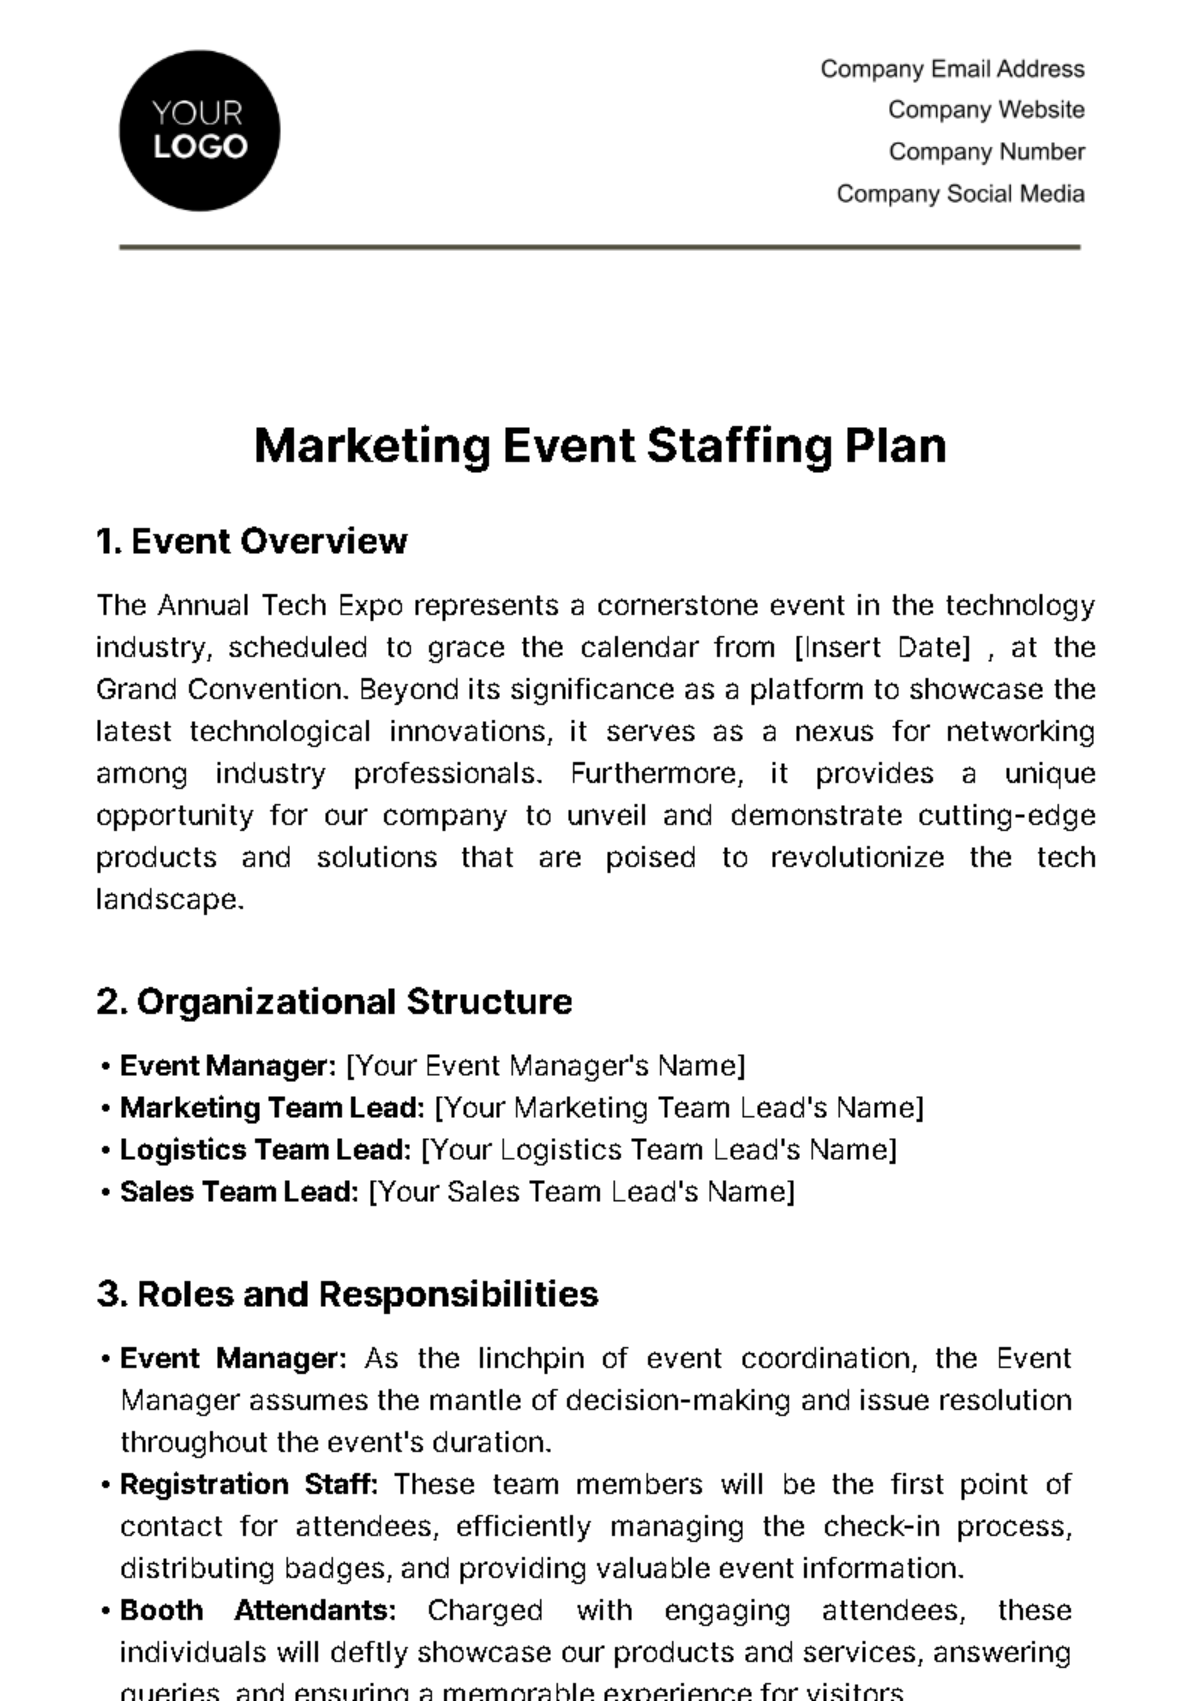 Marketing Event Staffing Plan Template